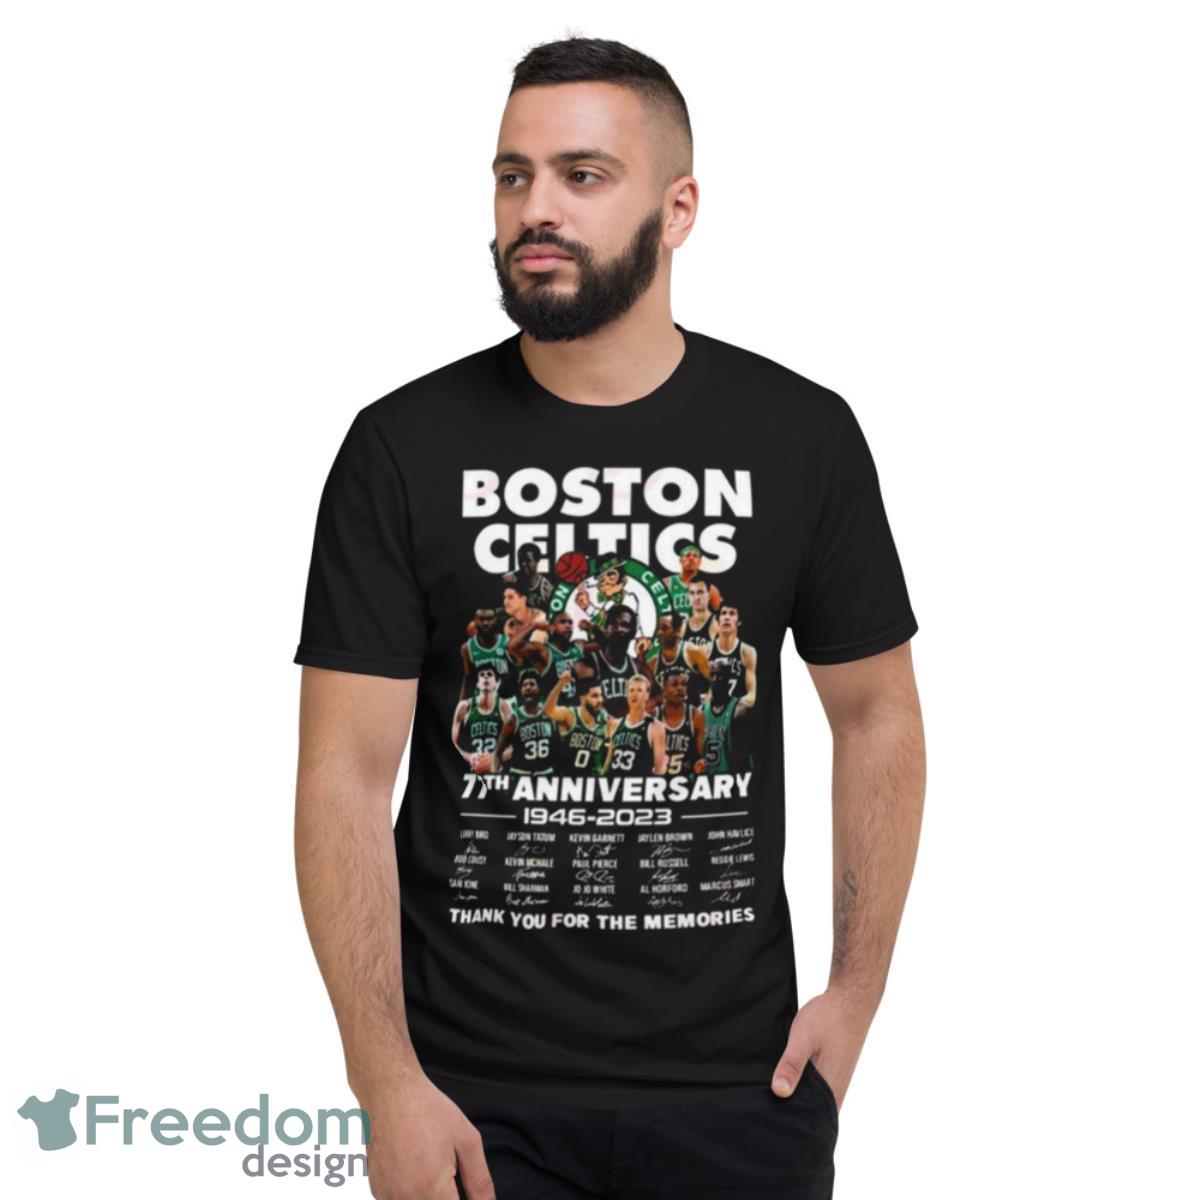 Hot Boston Celtics 77th Anniversary 1946 – 2023 Thank You For The Memories Shirt